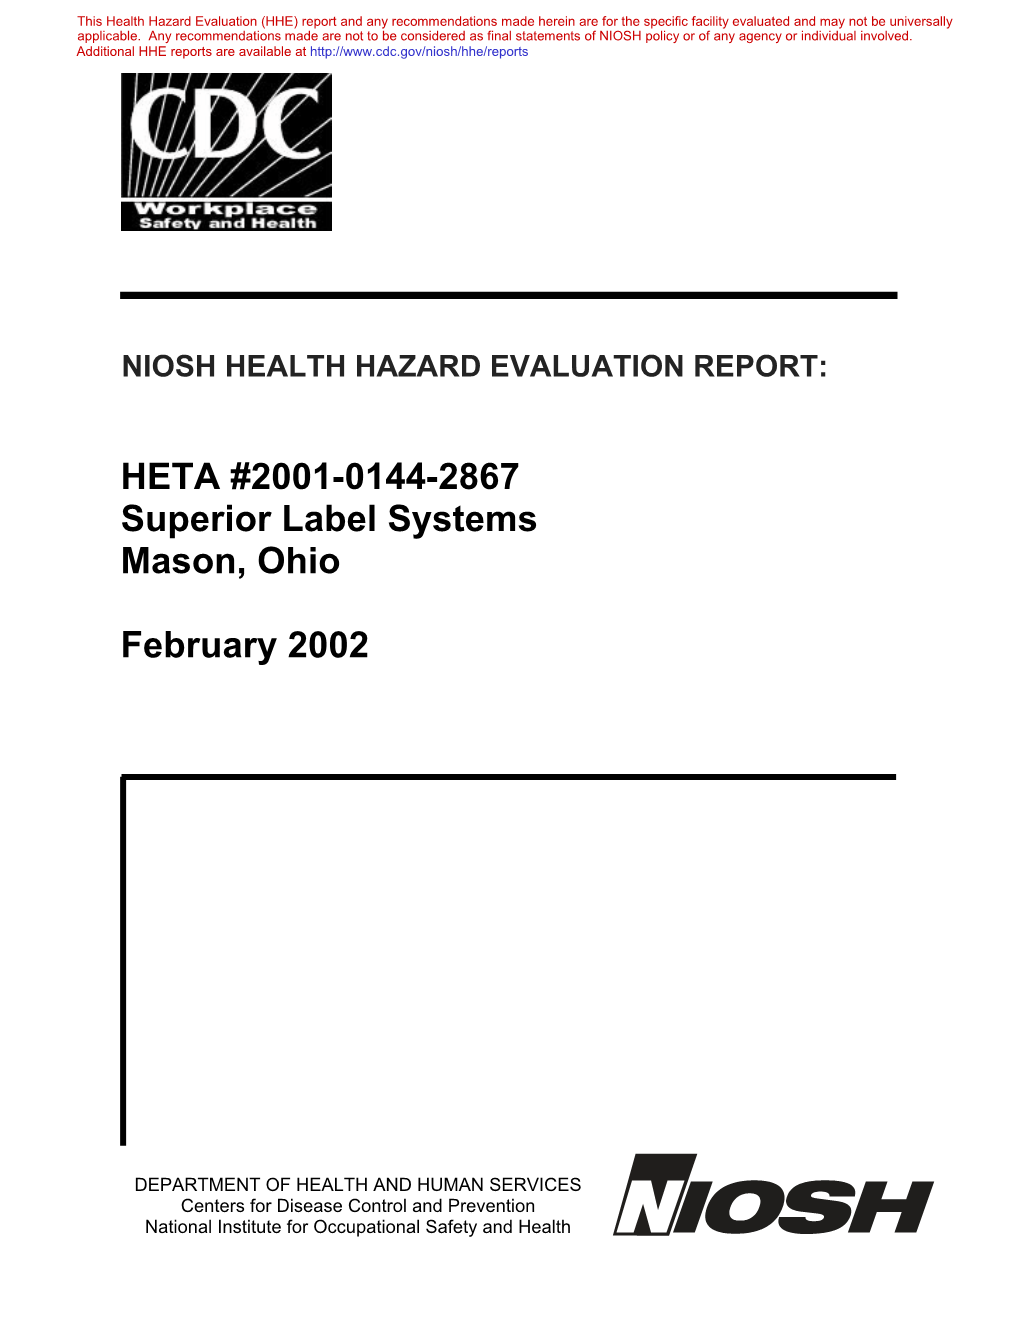 HHE Report No. HETA-2001-0144-2867, Superior